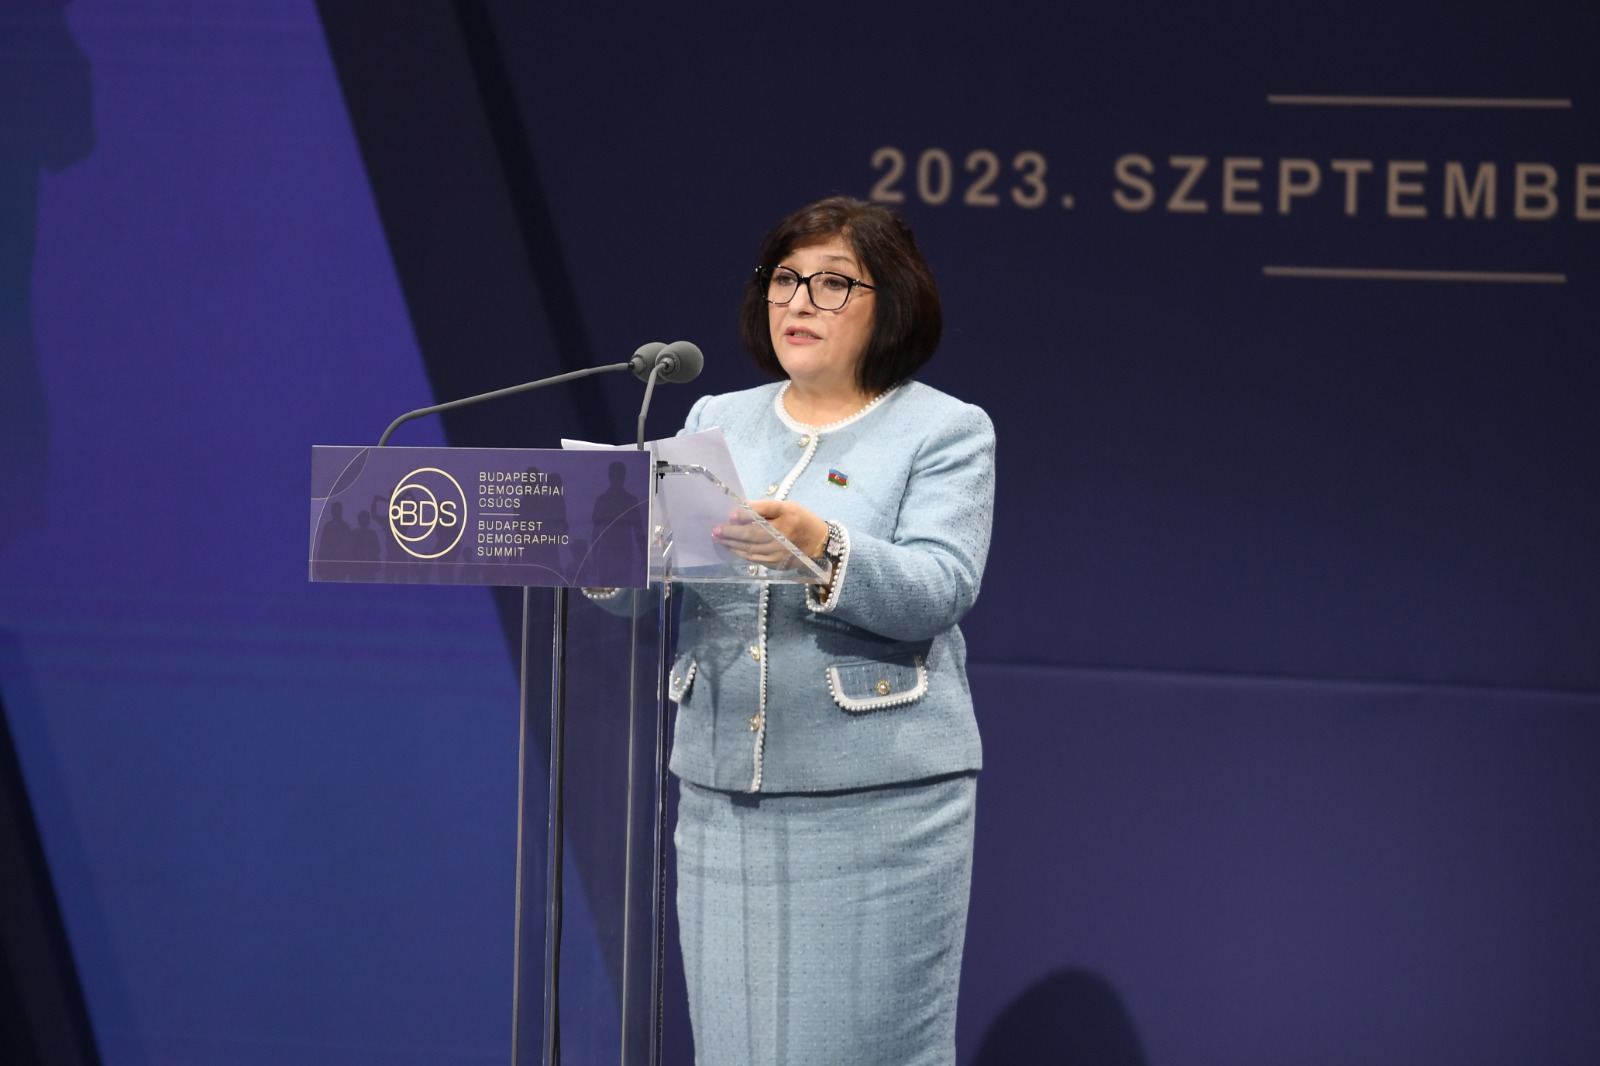 Сахиба Гафарова рассказала о Ходжалинском геноциде на Будапештском демографическом саммите (ФОТО)